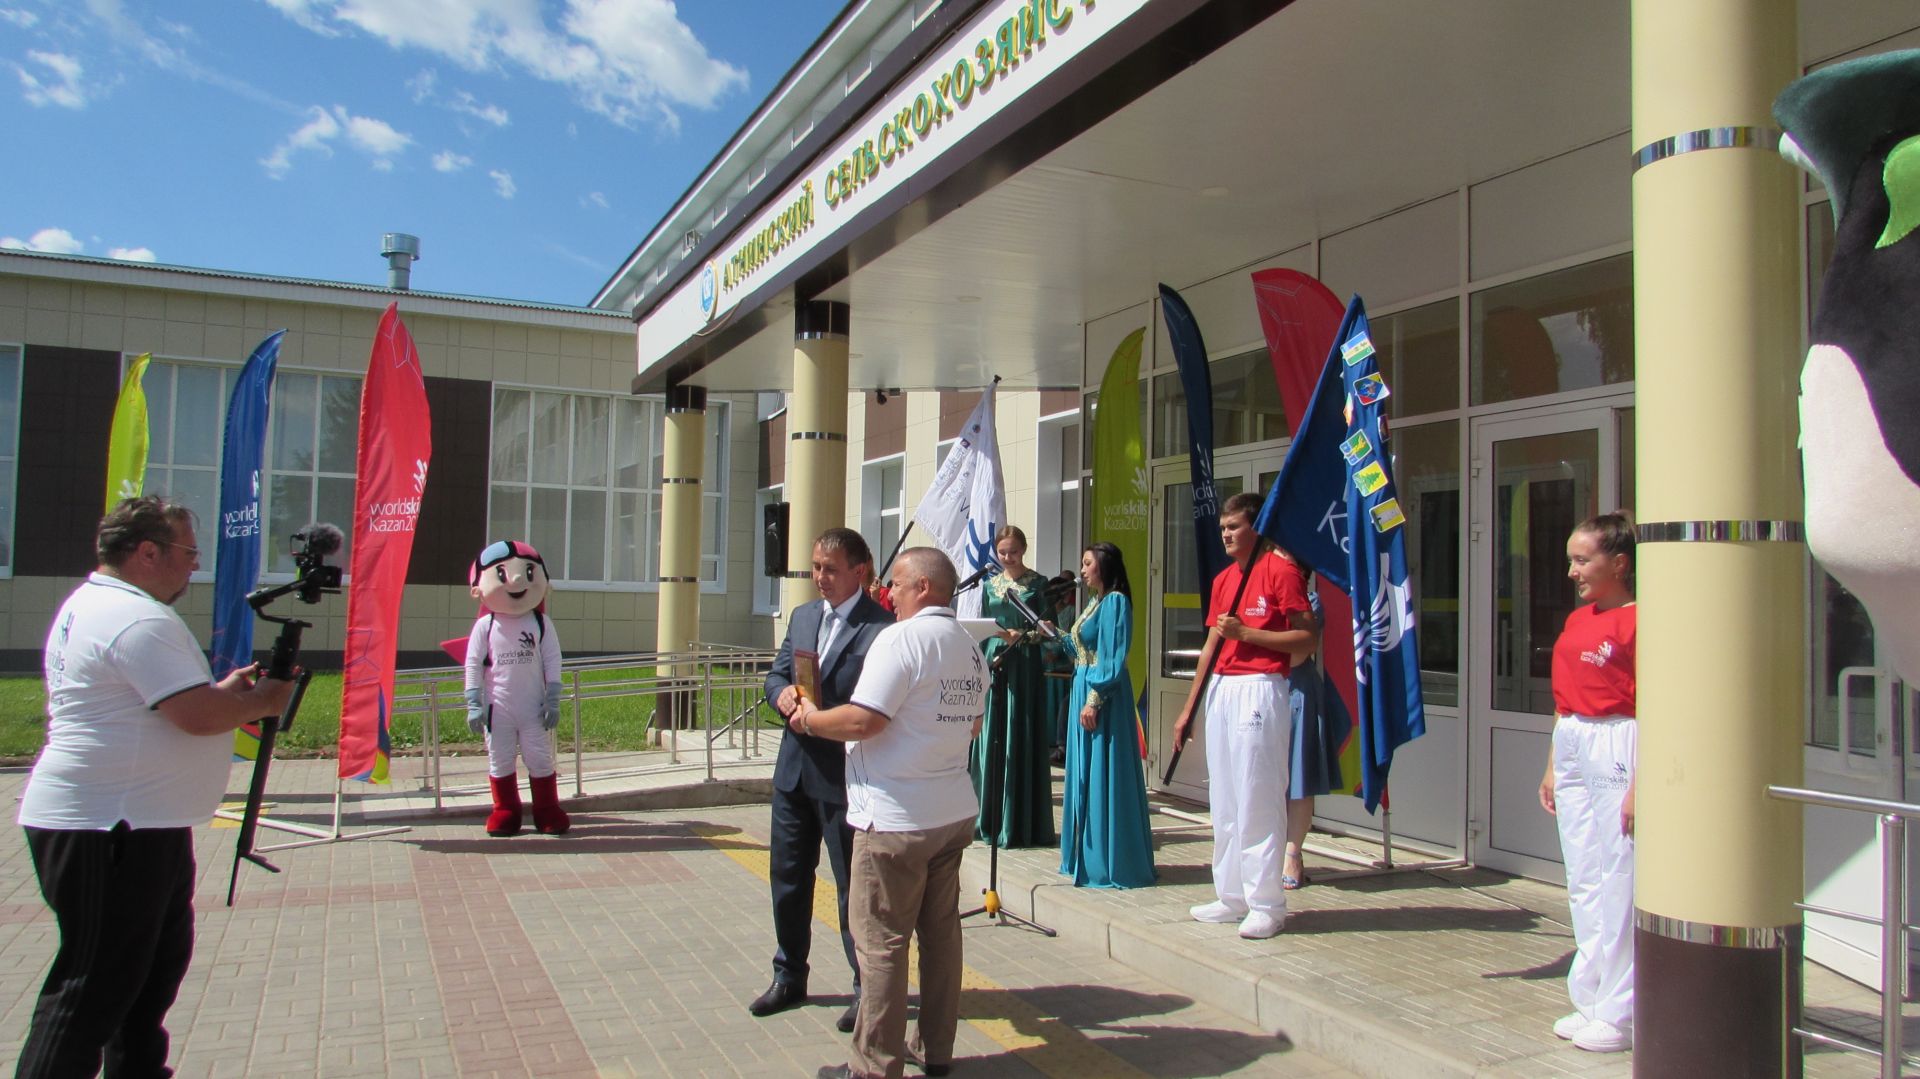 Әтнә  WorldSkills һәм WorldSkills Kazan 2019 әләмнәрен кабул итте - фоторепортаж